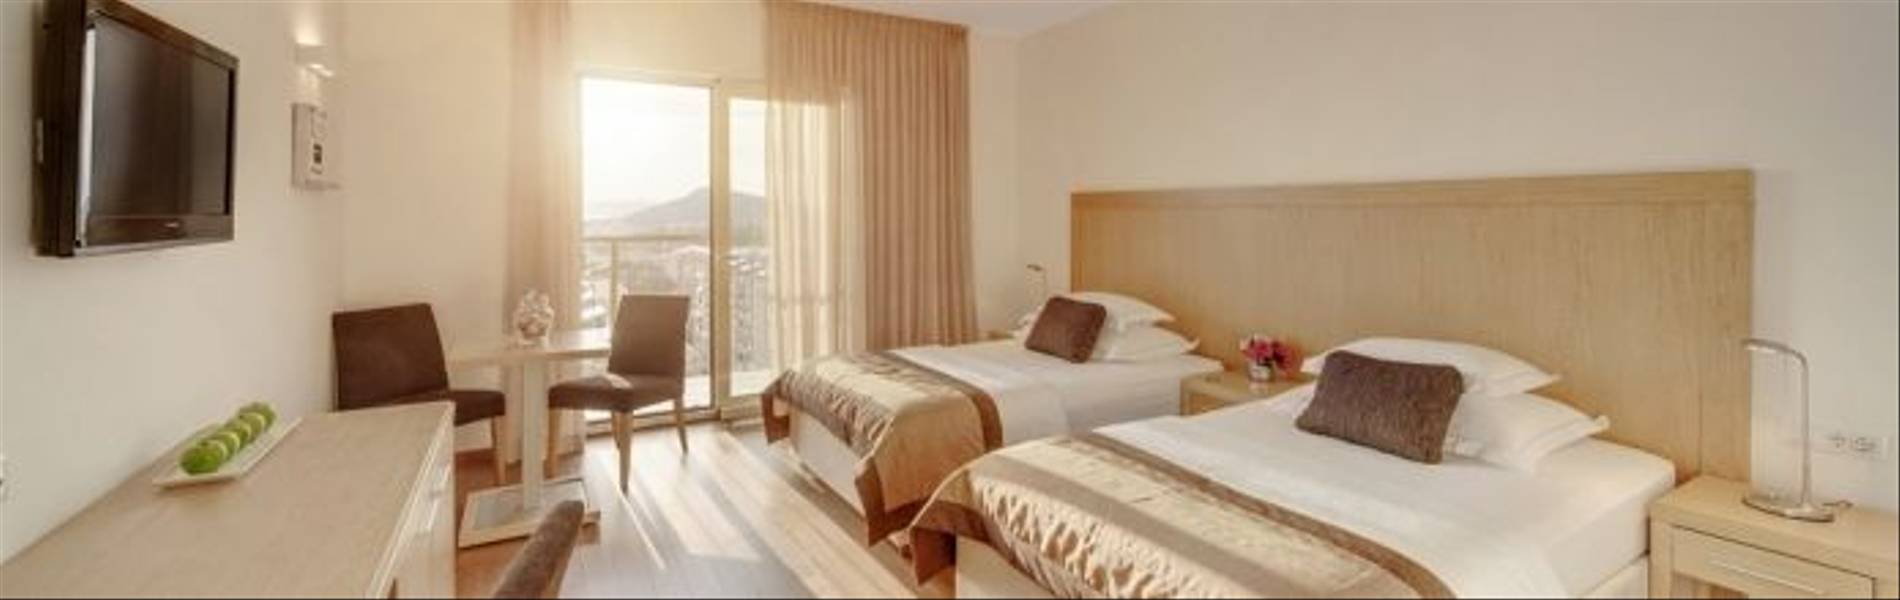 HotelResidence_DIOKLECIJAN_room-bedRoom-interier-panorama_2048px_5D3A2462-695x409.jpg